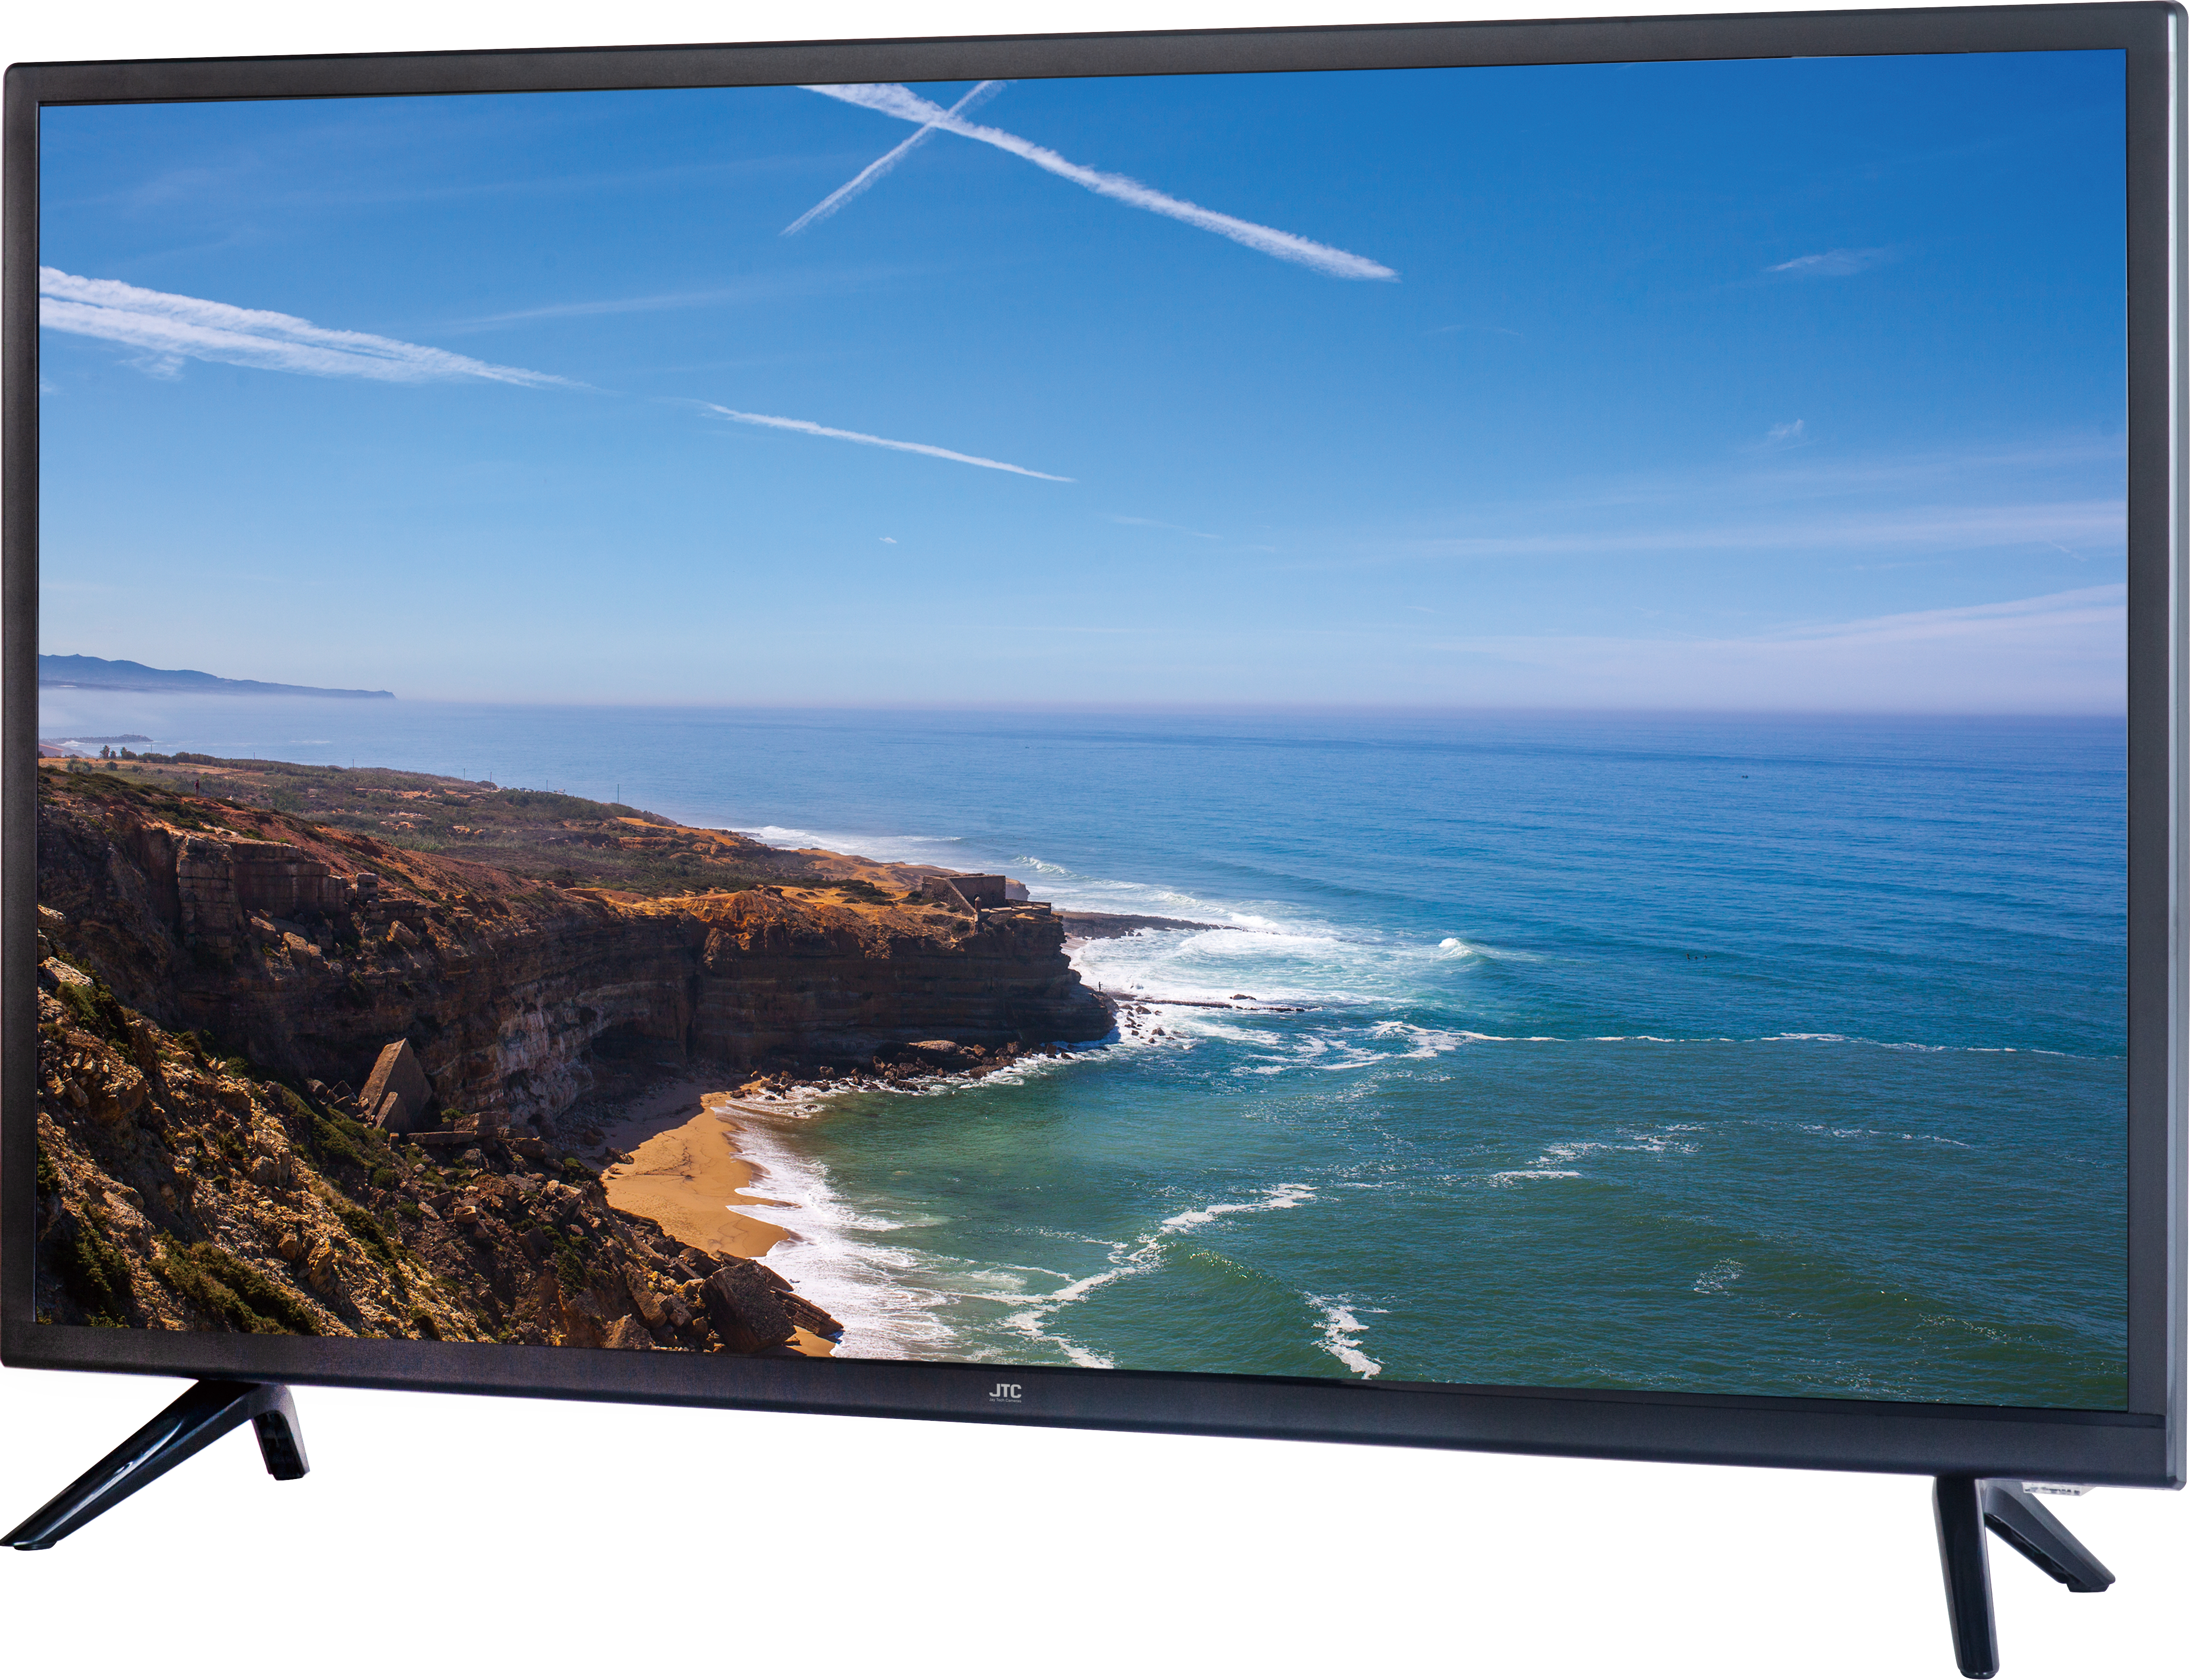 JTC HD Smart TV 80 cm, Zoll Android) 32 LED TV, SMART / OS23250HSA TV HD, (Flat